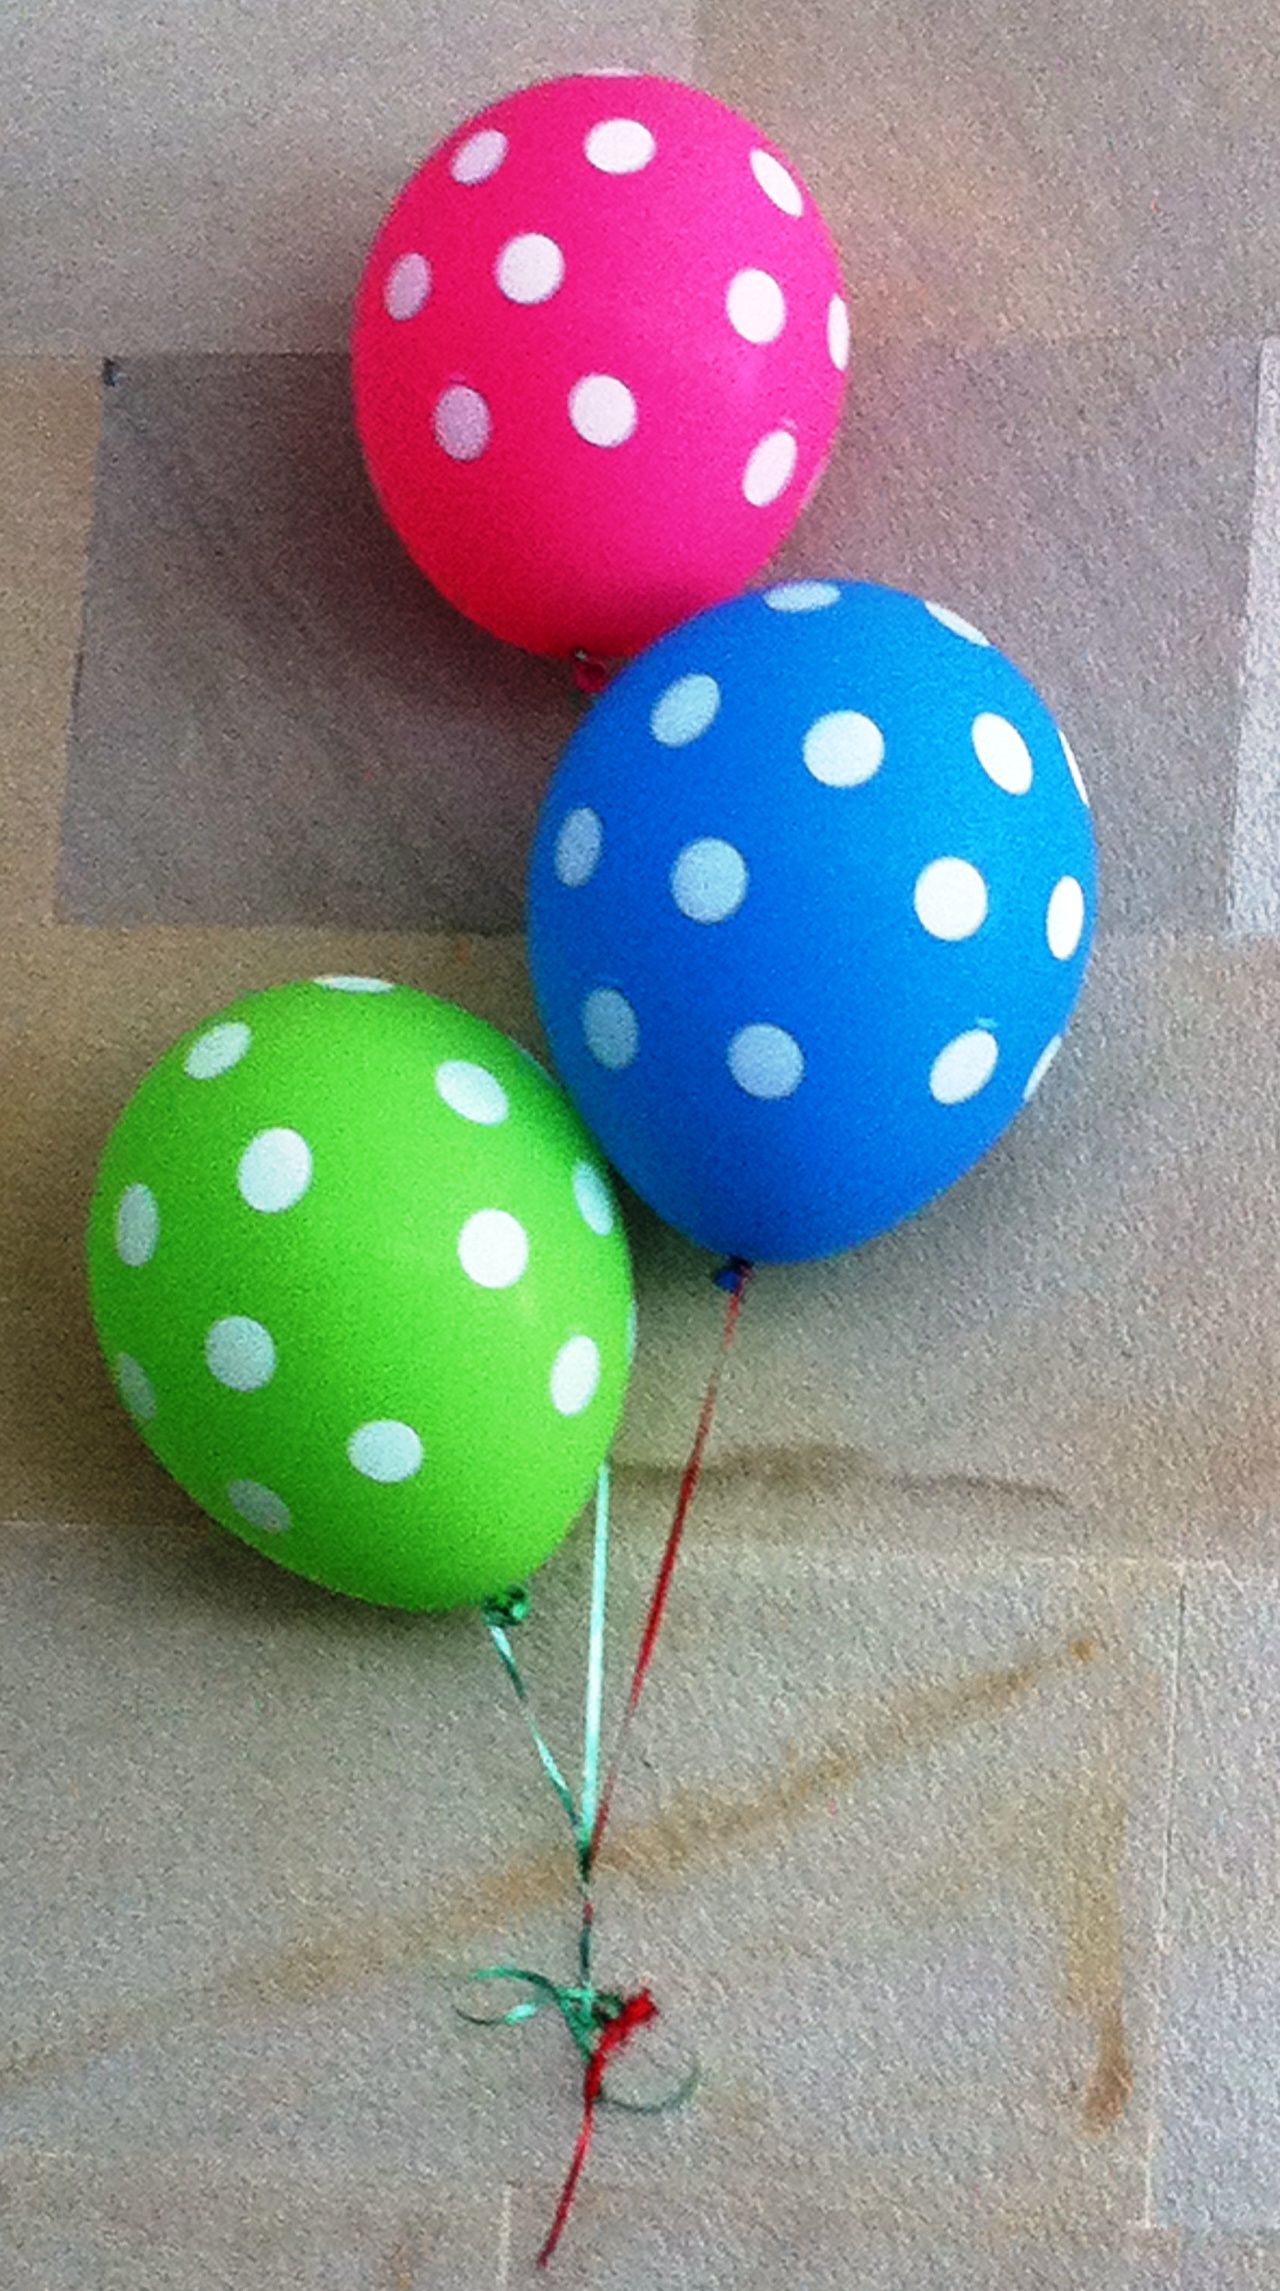 Who doesn't love polka dot balloons?